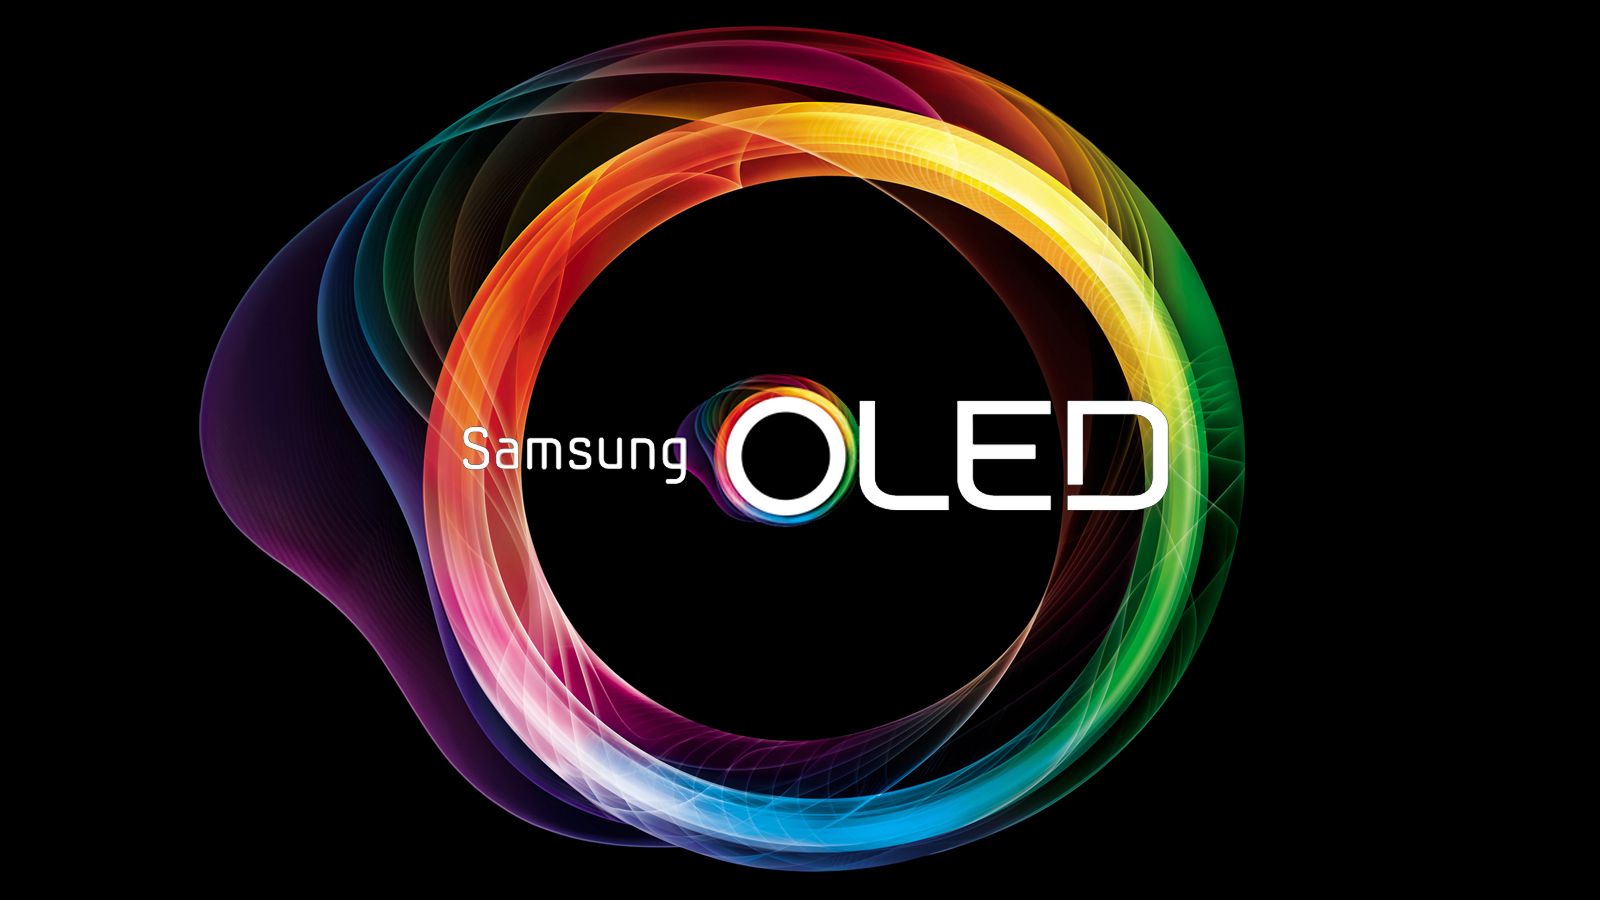 Samsung ประกาศลดการผลิตจอ OLED ลงเกือบครึ่งหลังจาก iPhone X ทำยอดขายได้ไม่ดี